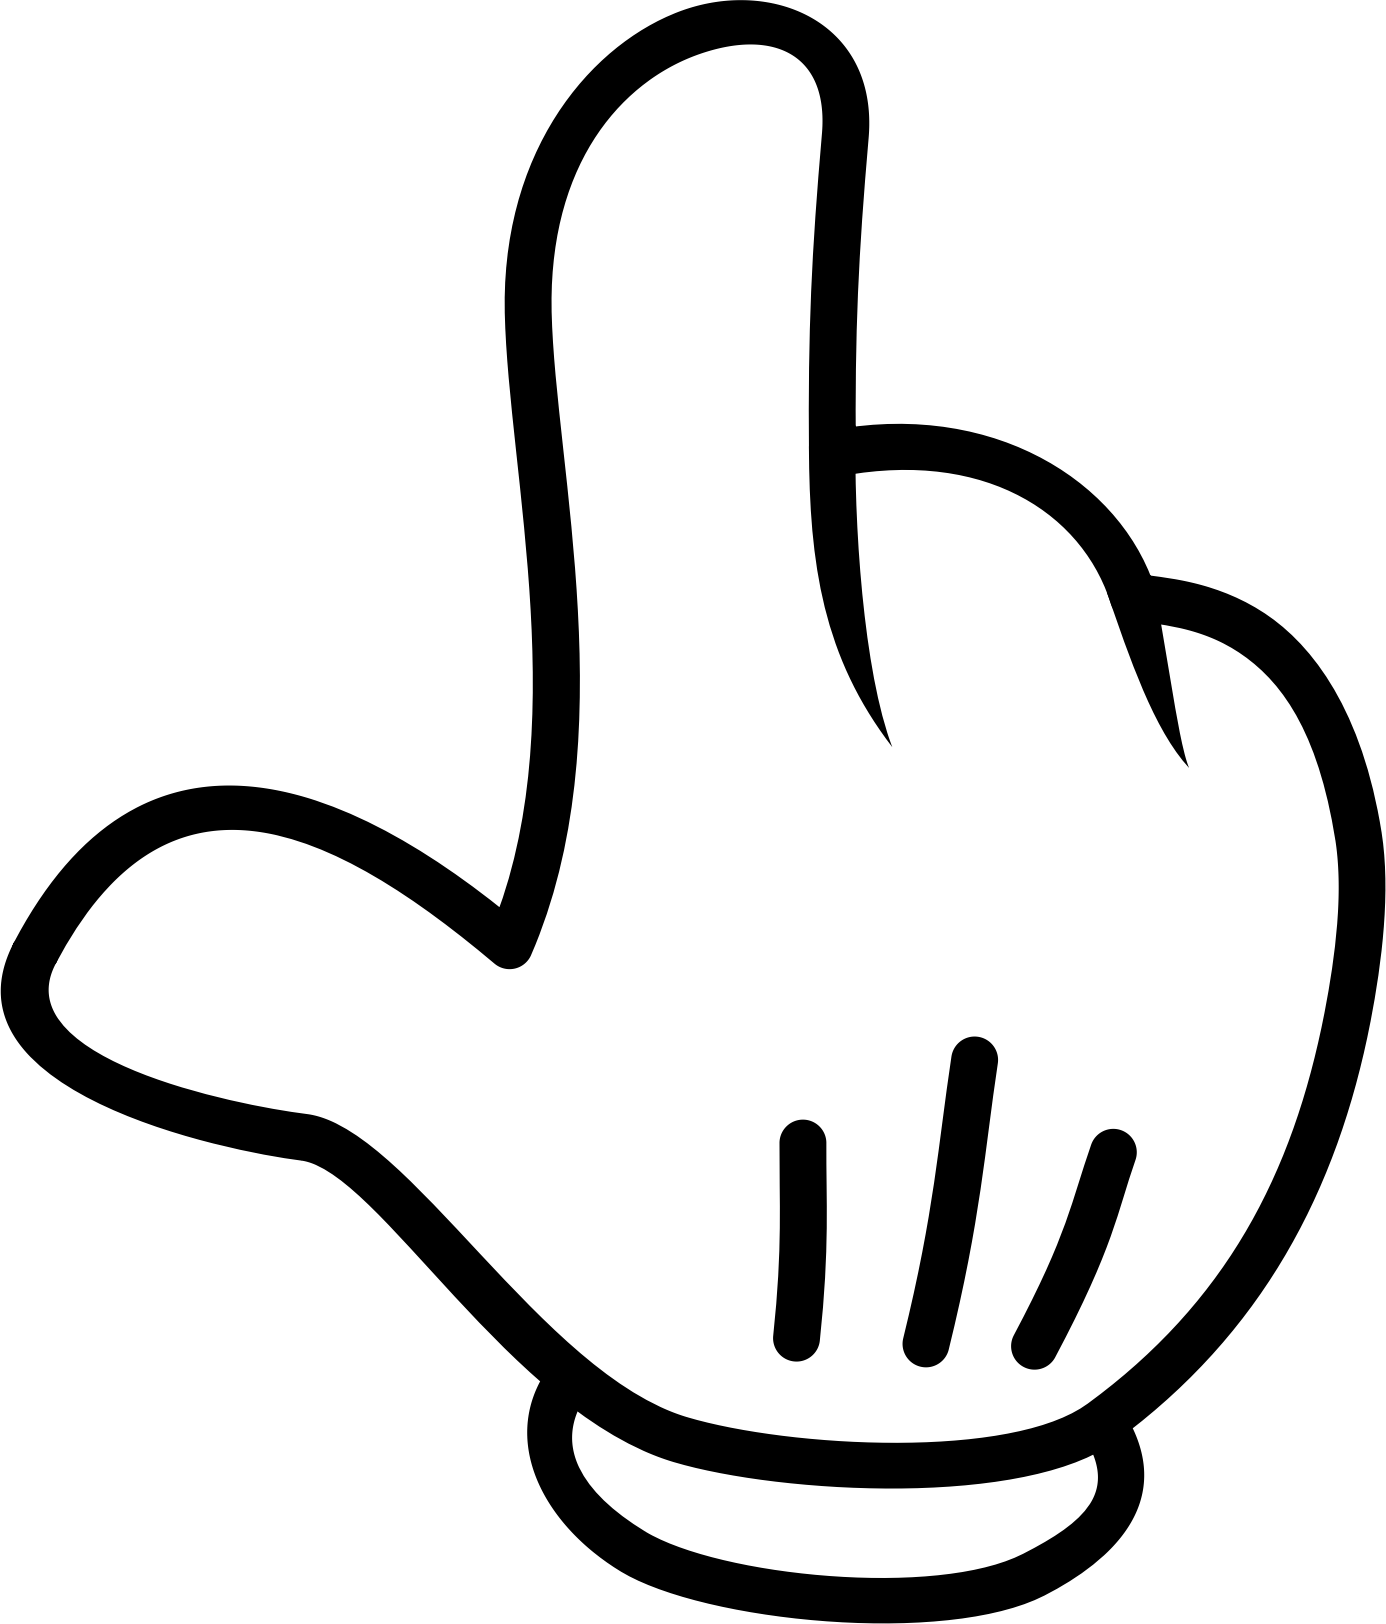 PNG Pointing Finger Transparent Pointing Finger.PNG Images. | PlusPNG